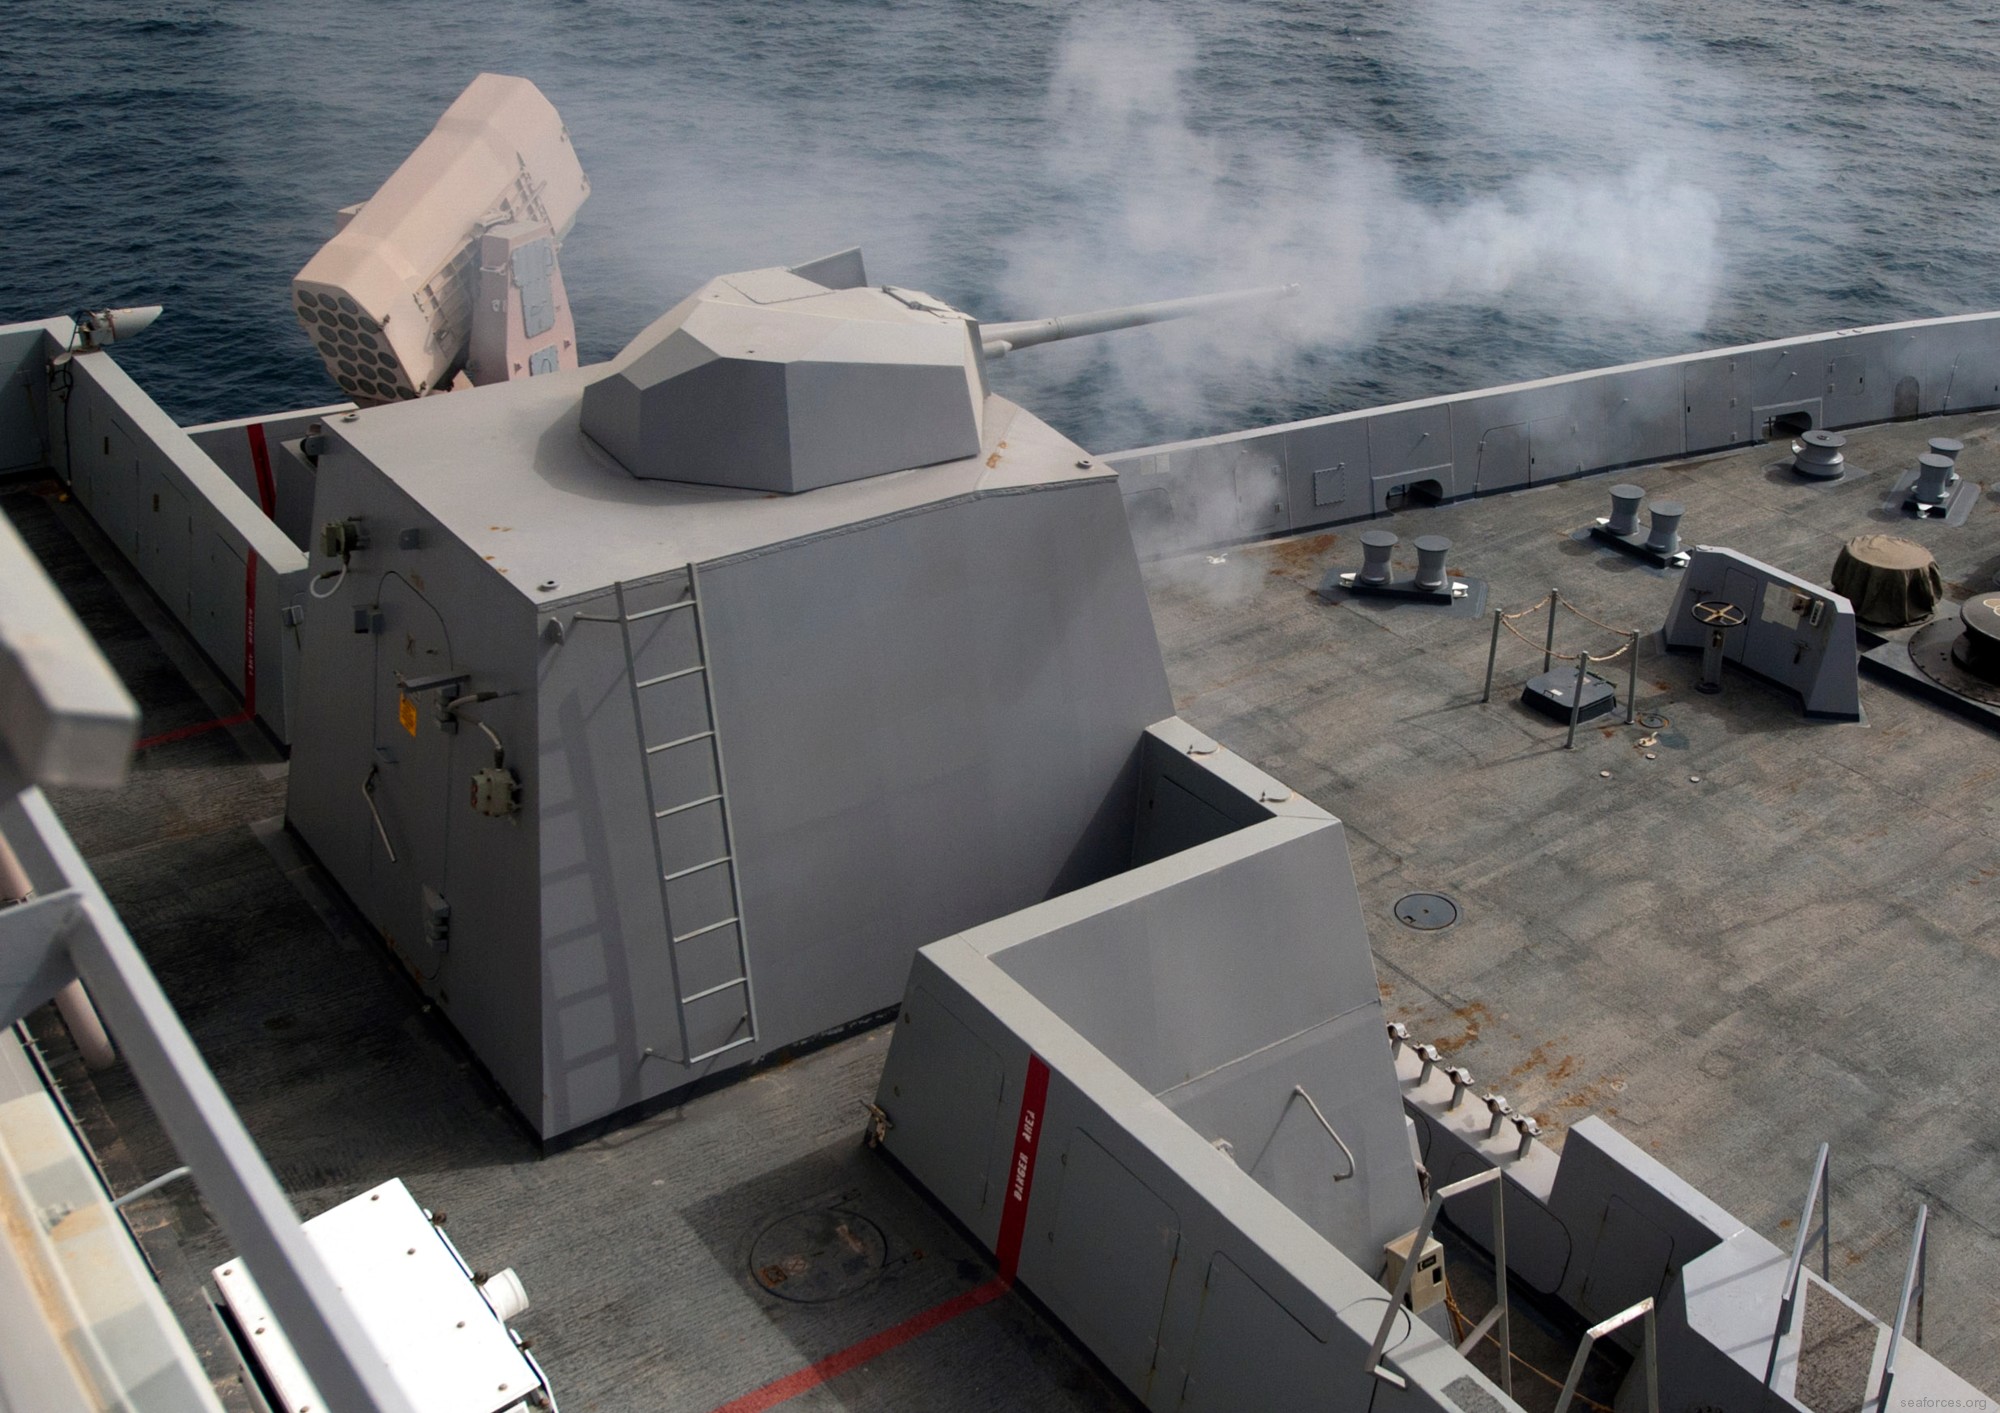 san antonio class amphibious transport dock ship landing platform navy 26x mk-46 30mm gun fire